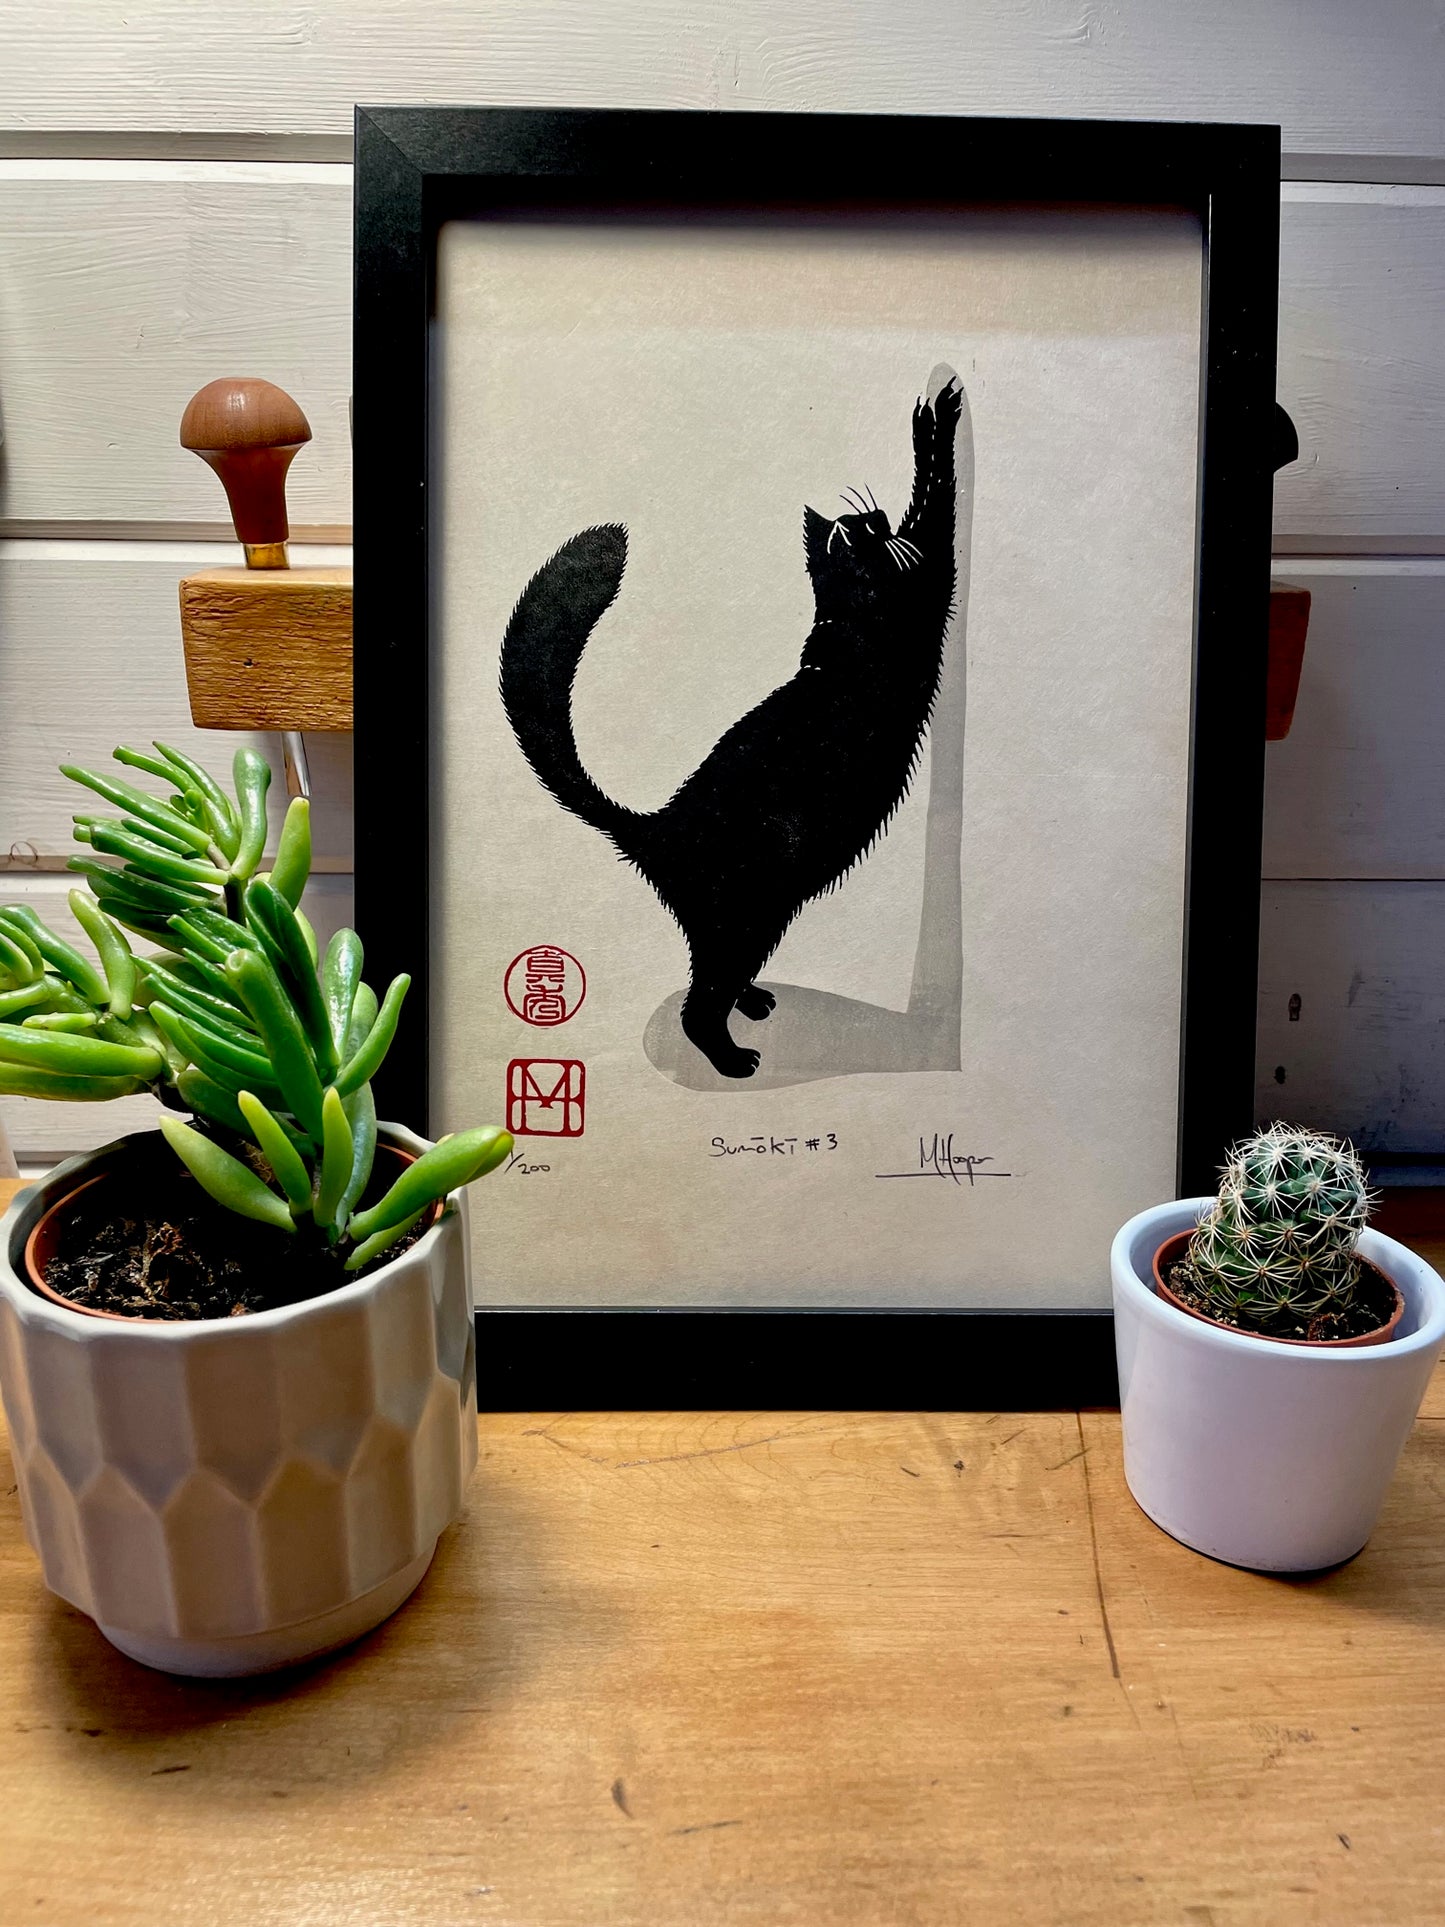 Sumōkī #3 - Japanese inspired cat linocut